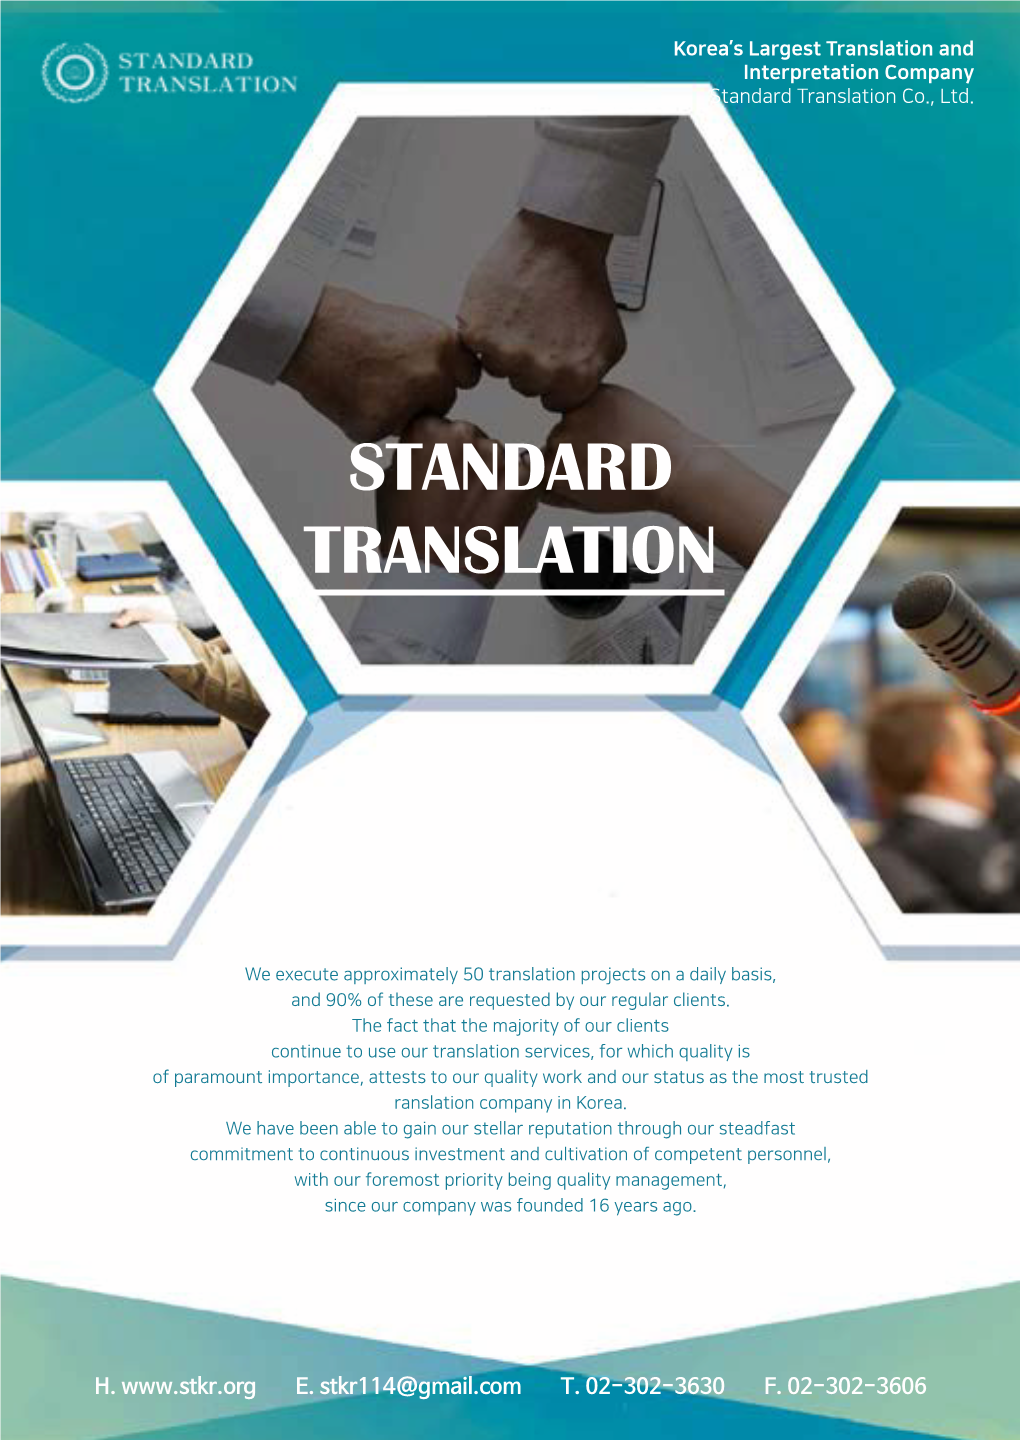 Standard Translation Co., Ltd